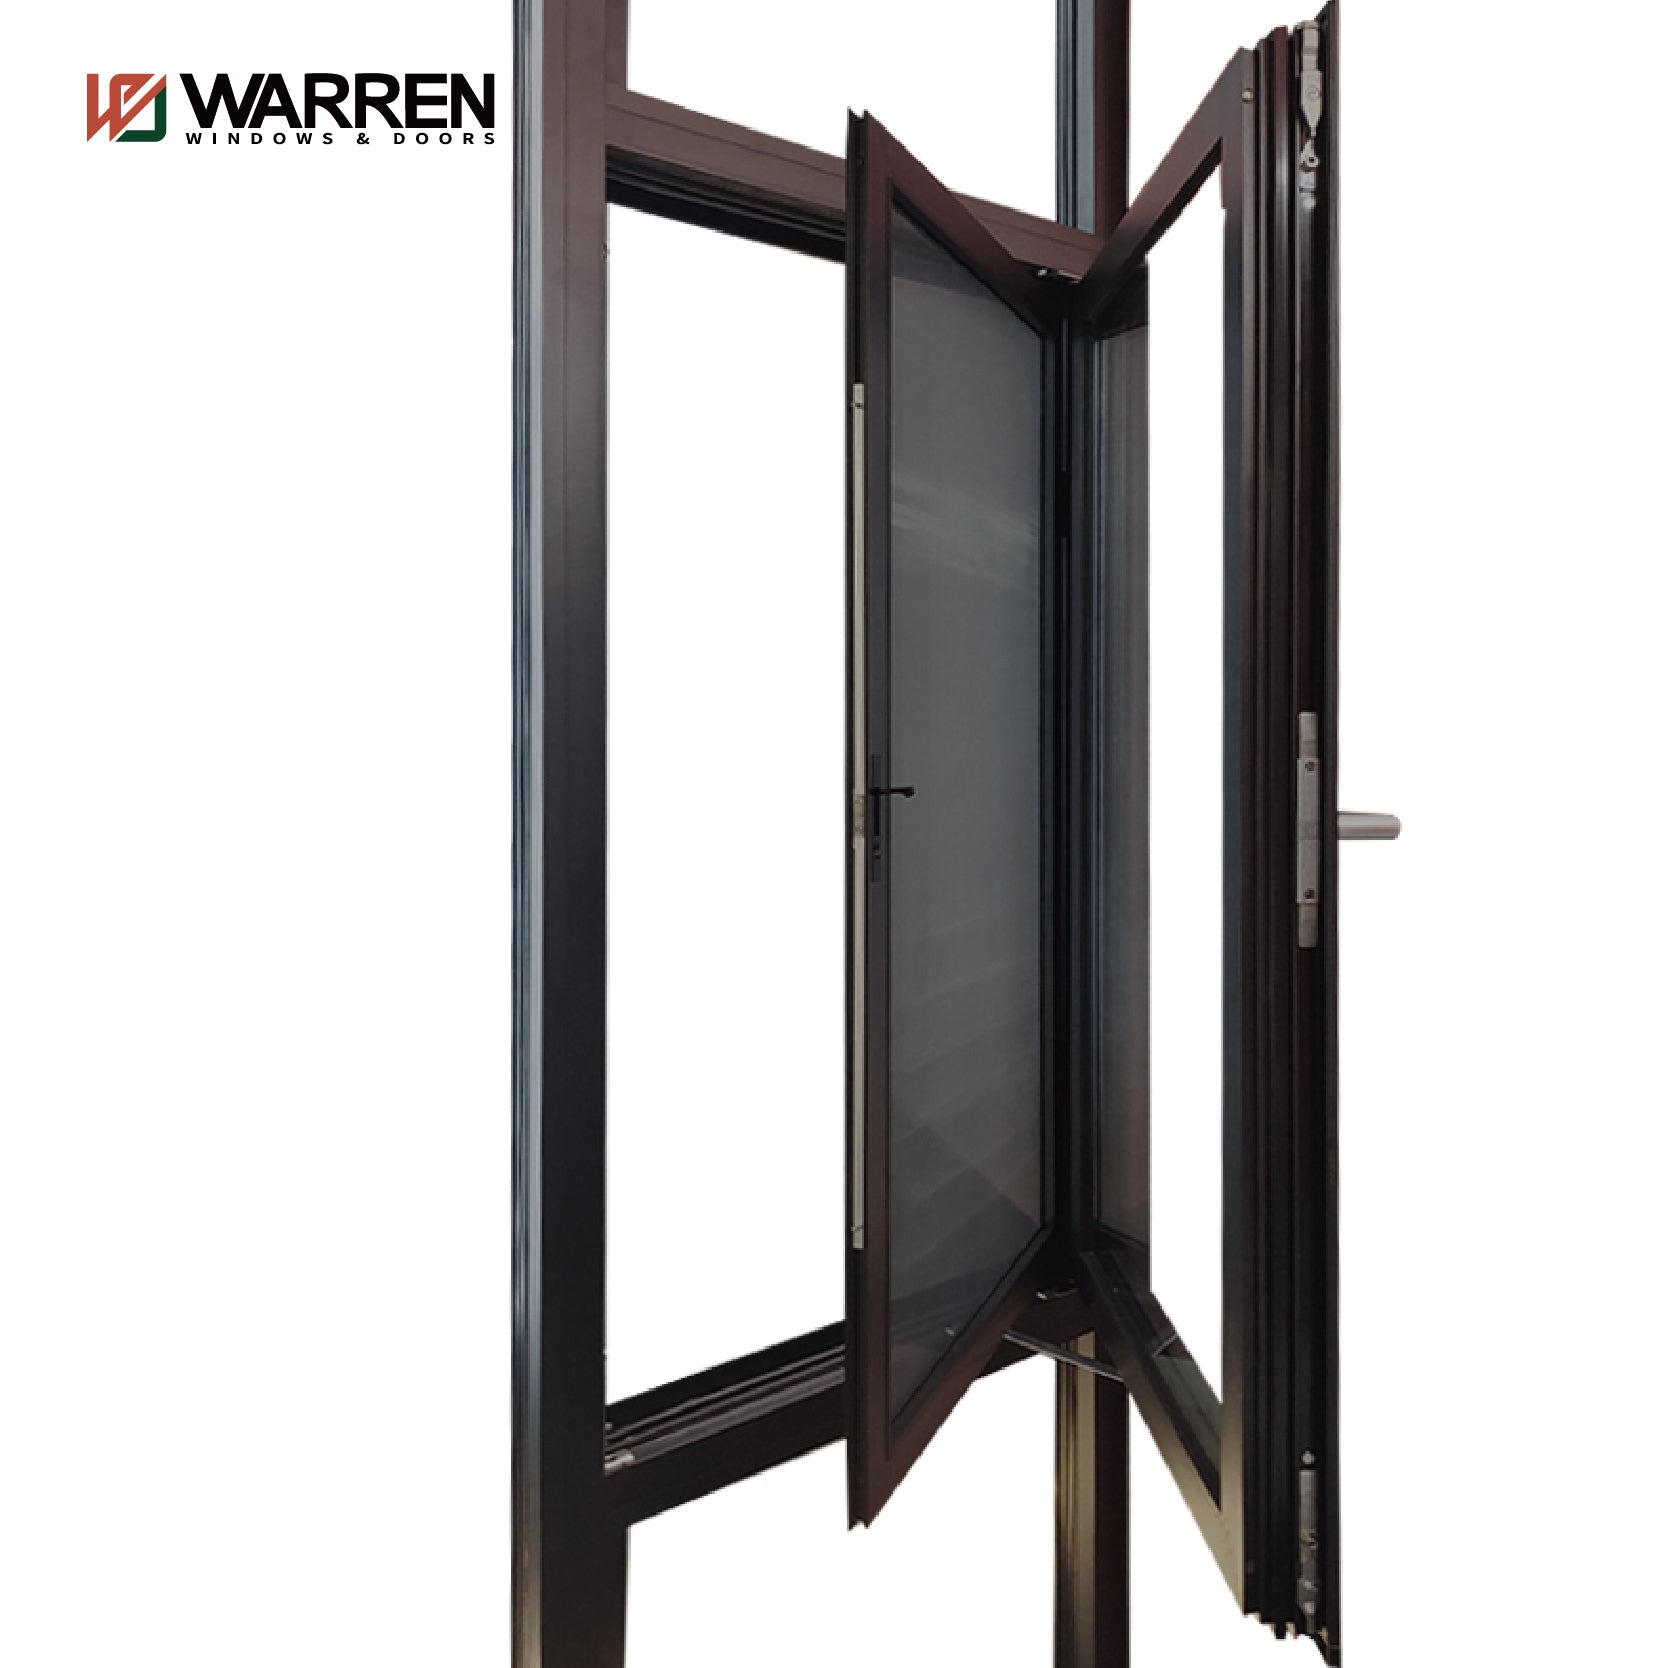 Warren 6 foot window energy saving high quality aluminum thermal break casement sliding window screen grill design